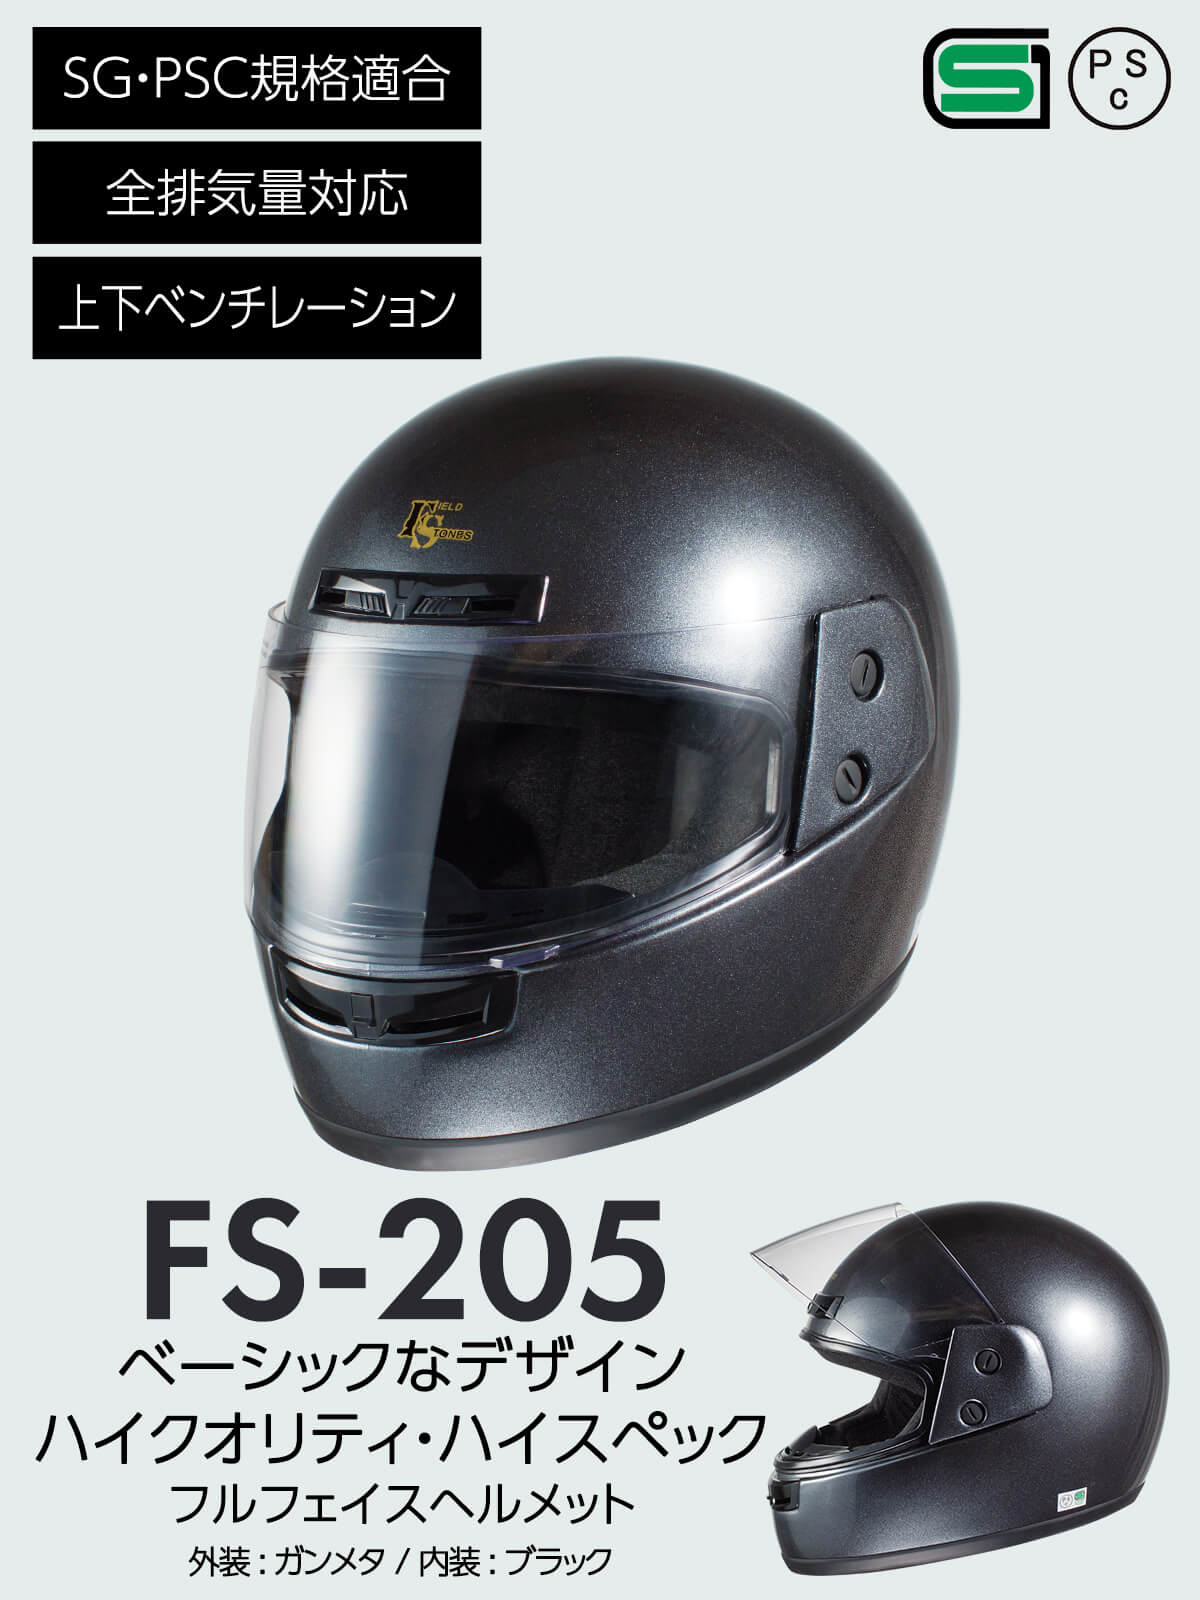  мотоцикл шлем full-face FS-205 FS-JAPAN камень . association / SG стандарт PSC стандарт 